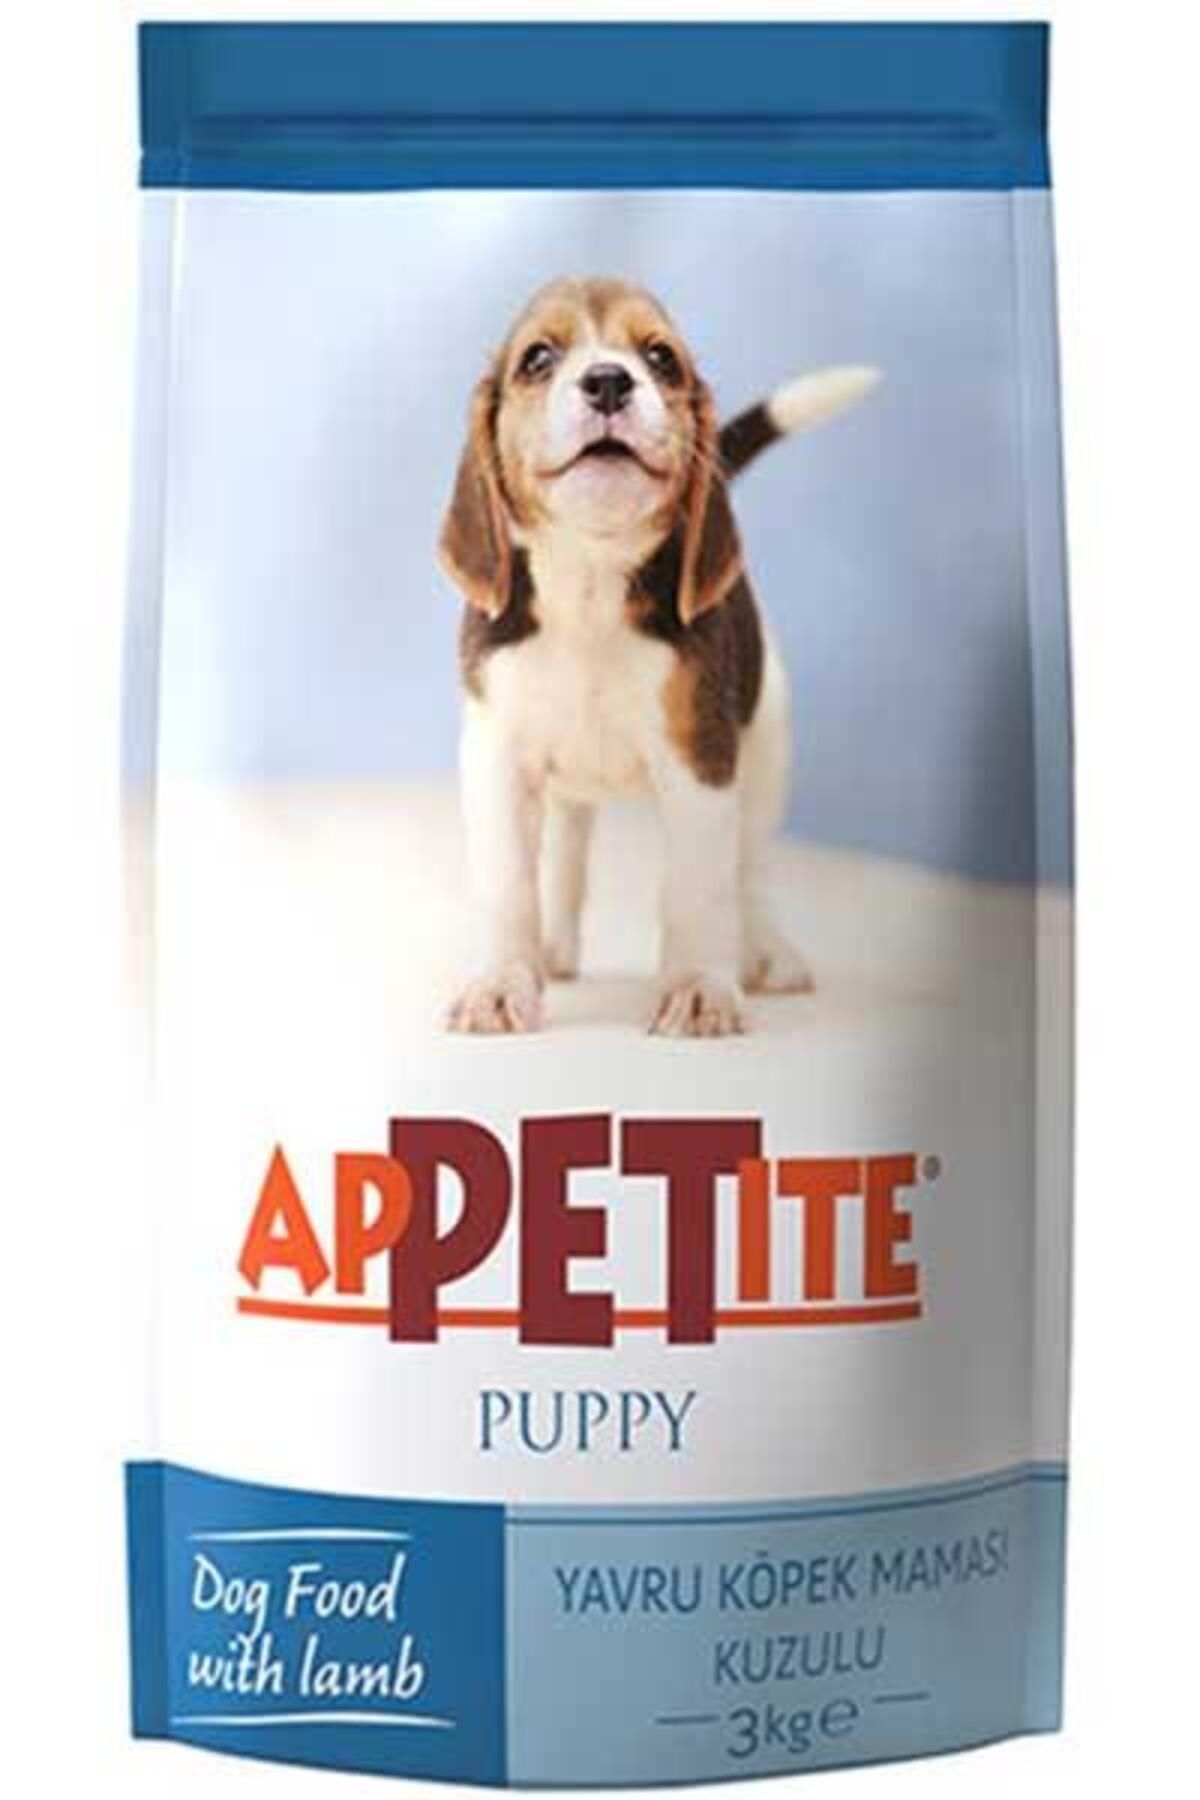 Appetite Puppy Kuzulu Yavru Köpek Mamasi 3kg X 2 Adet